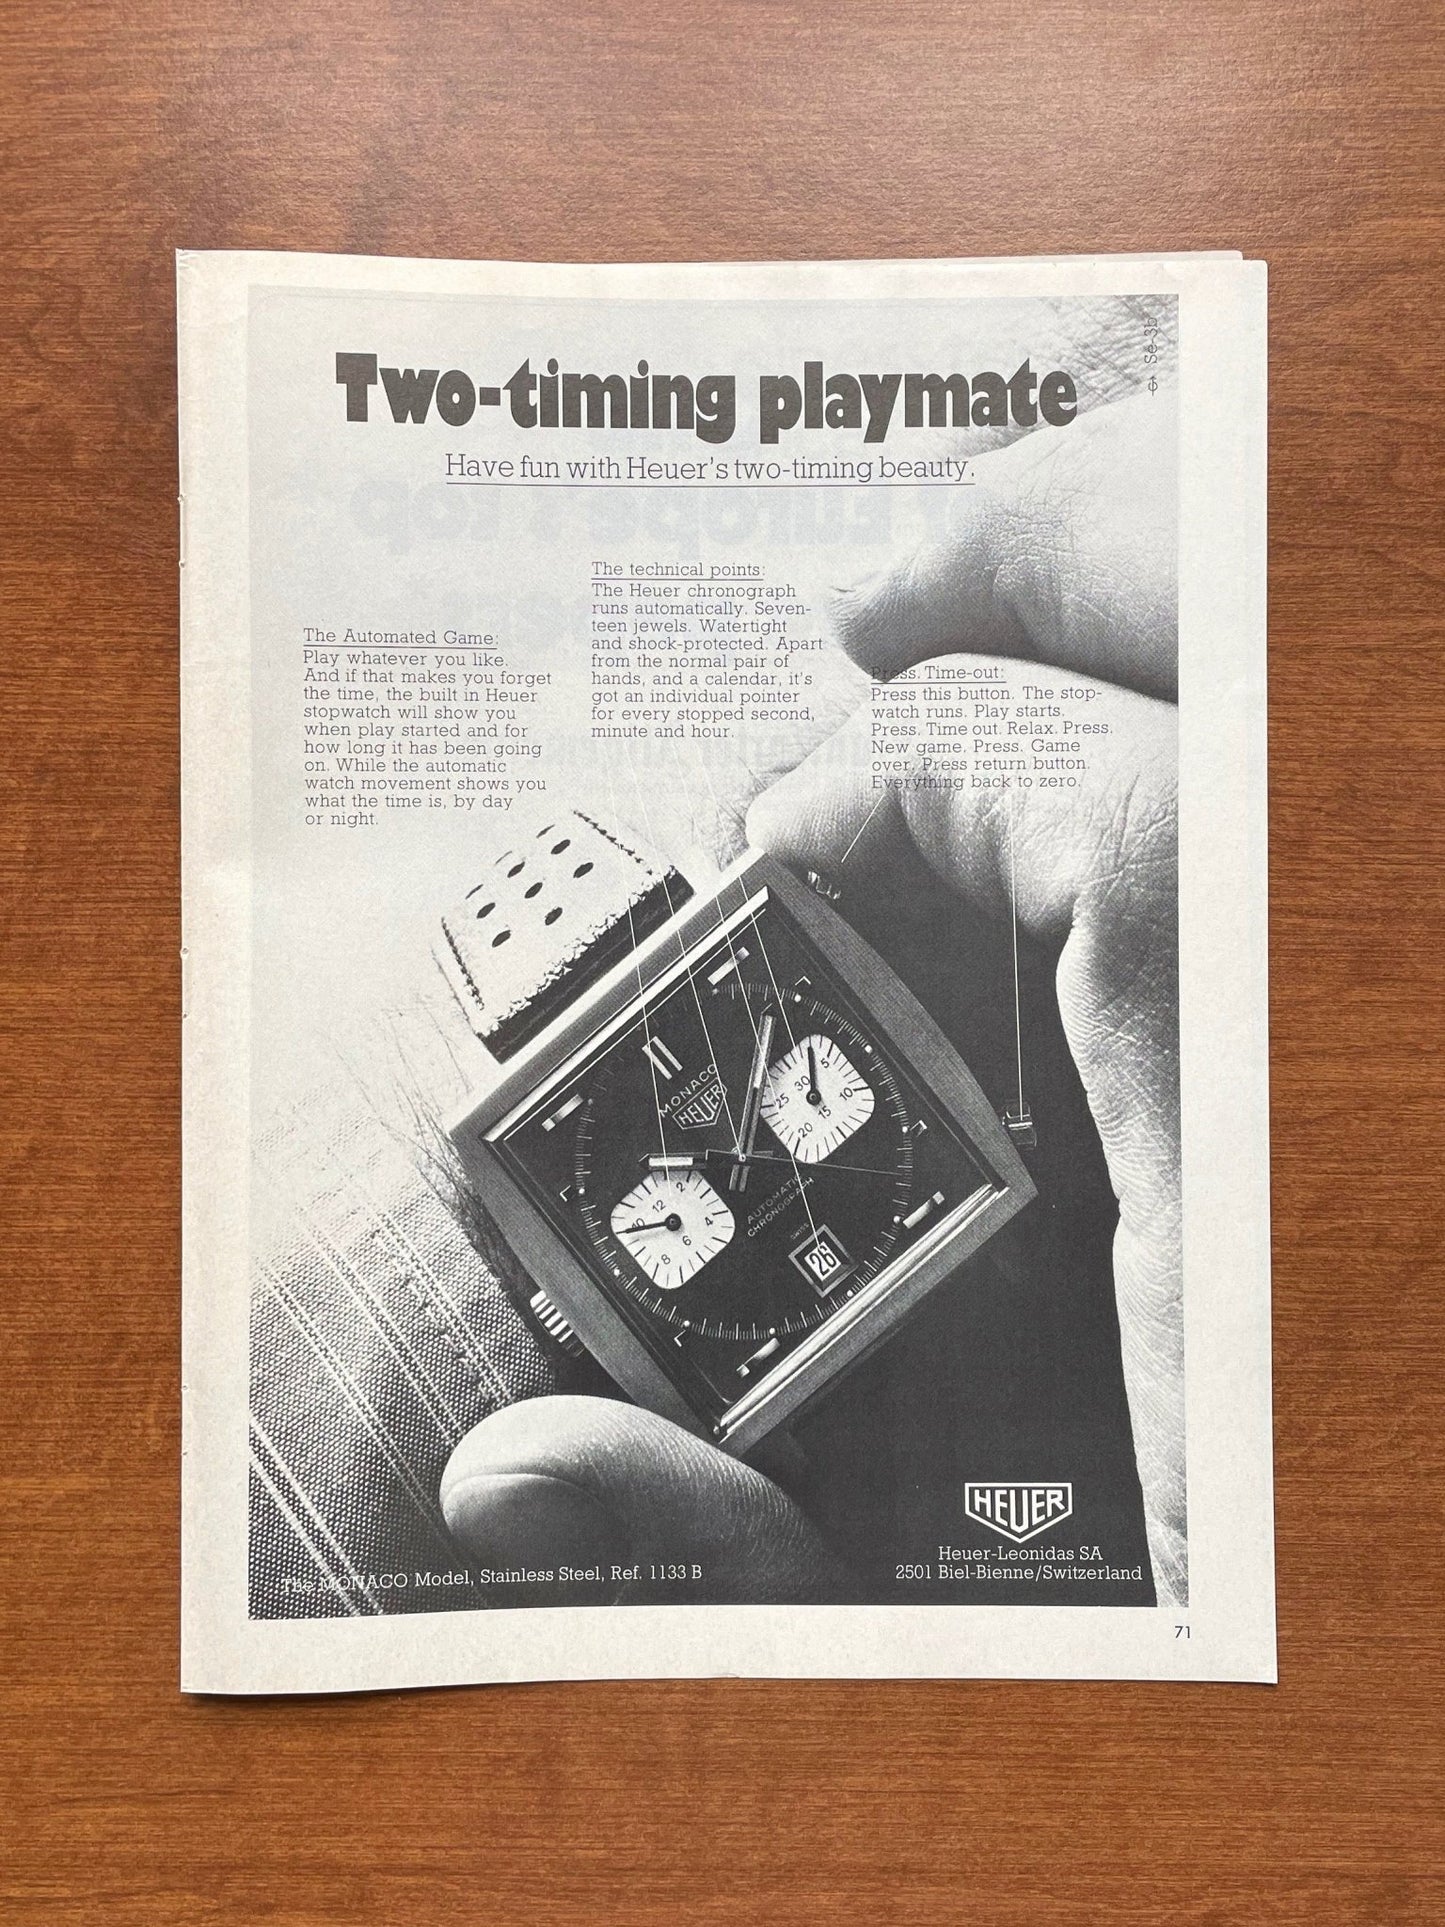 1970 Heuer Monaco "Two-timing playmate" Advertisement